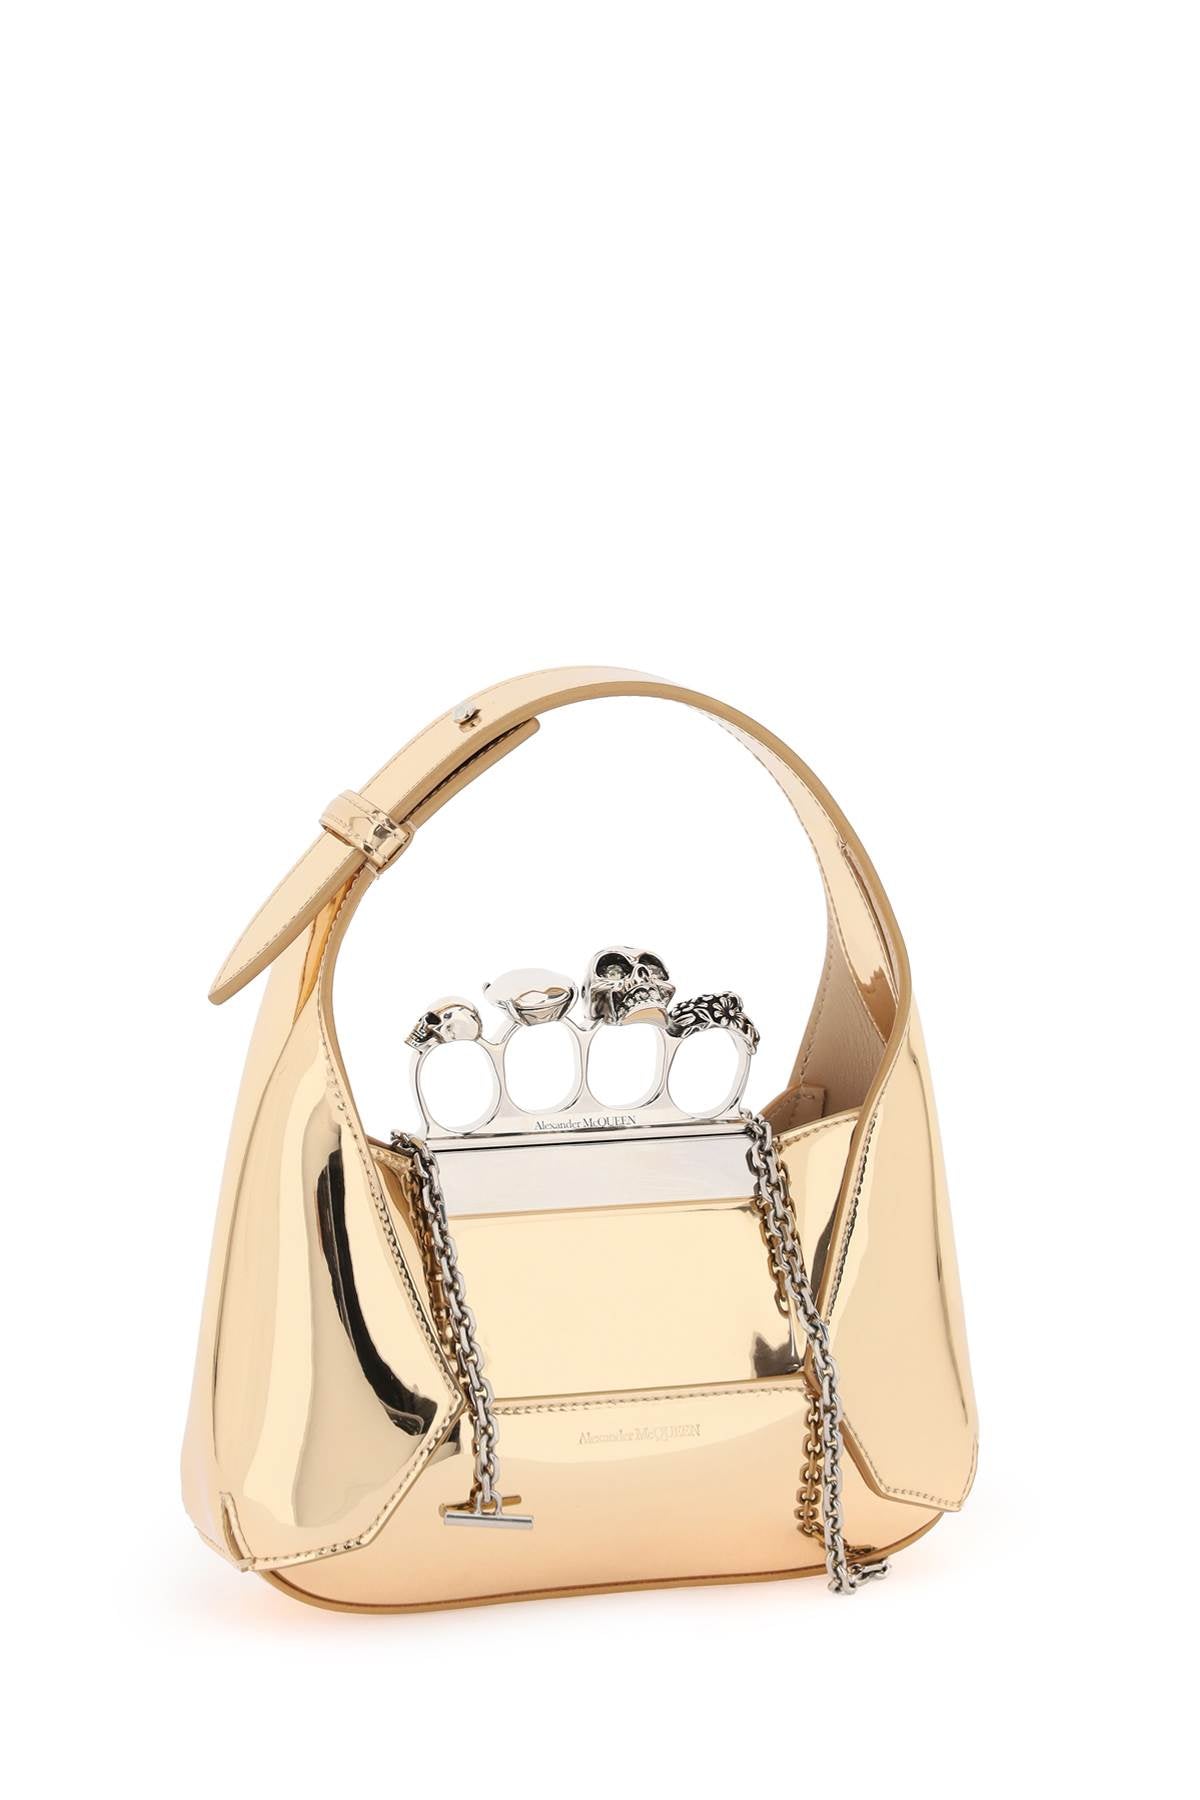 Mini Jewelled Hobo Handbag (Exclude brand name, avoid foreign words)